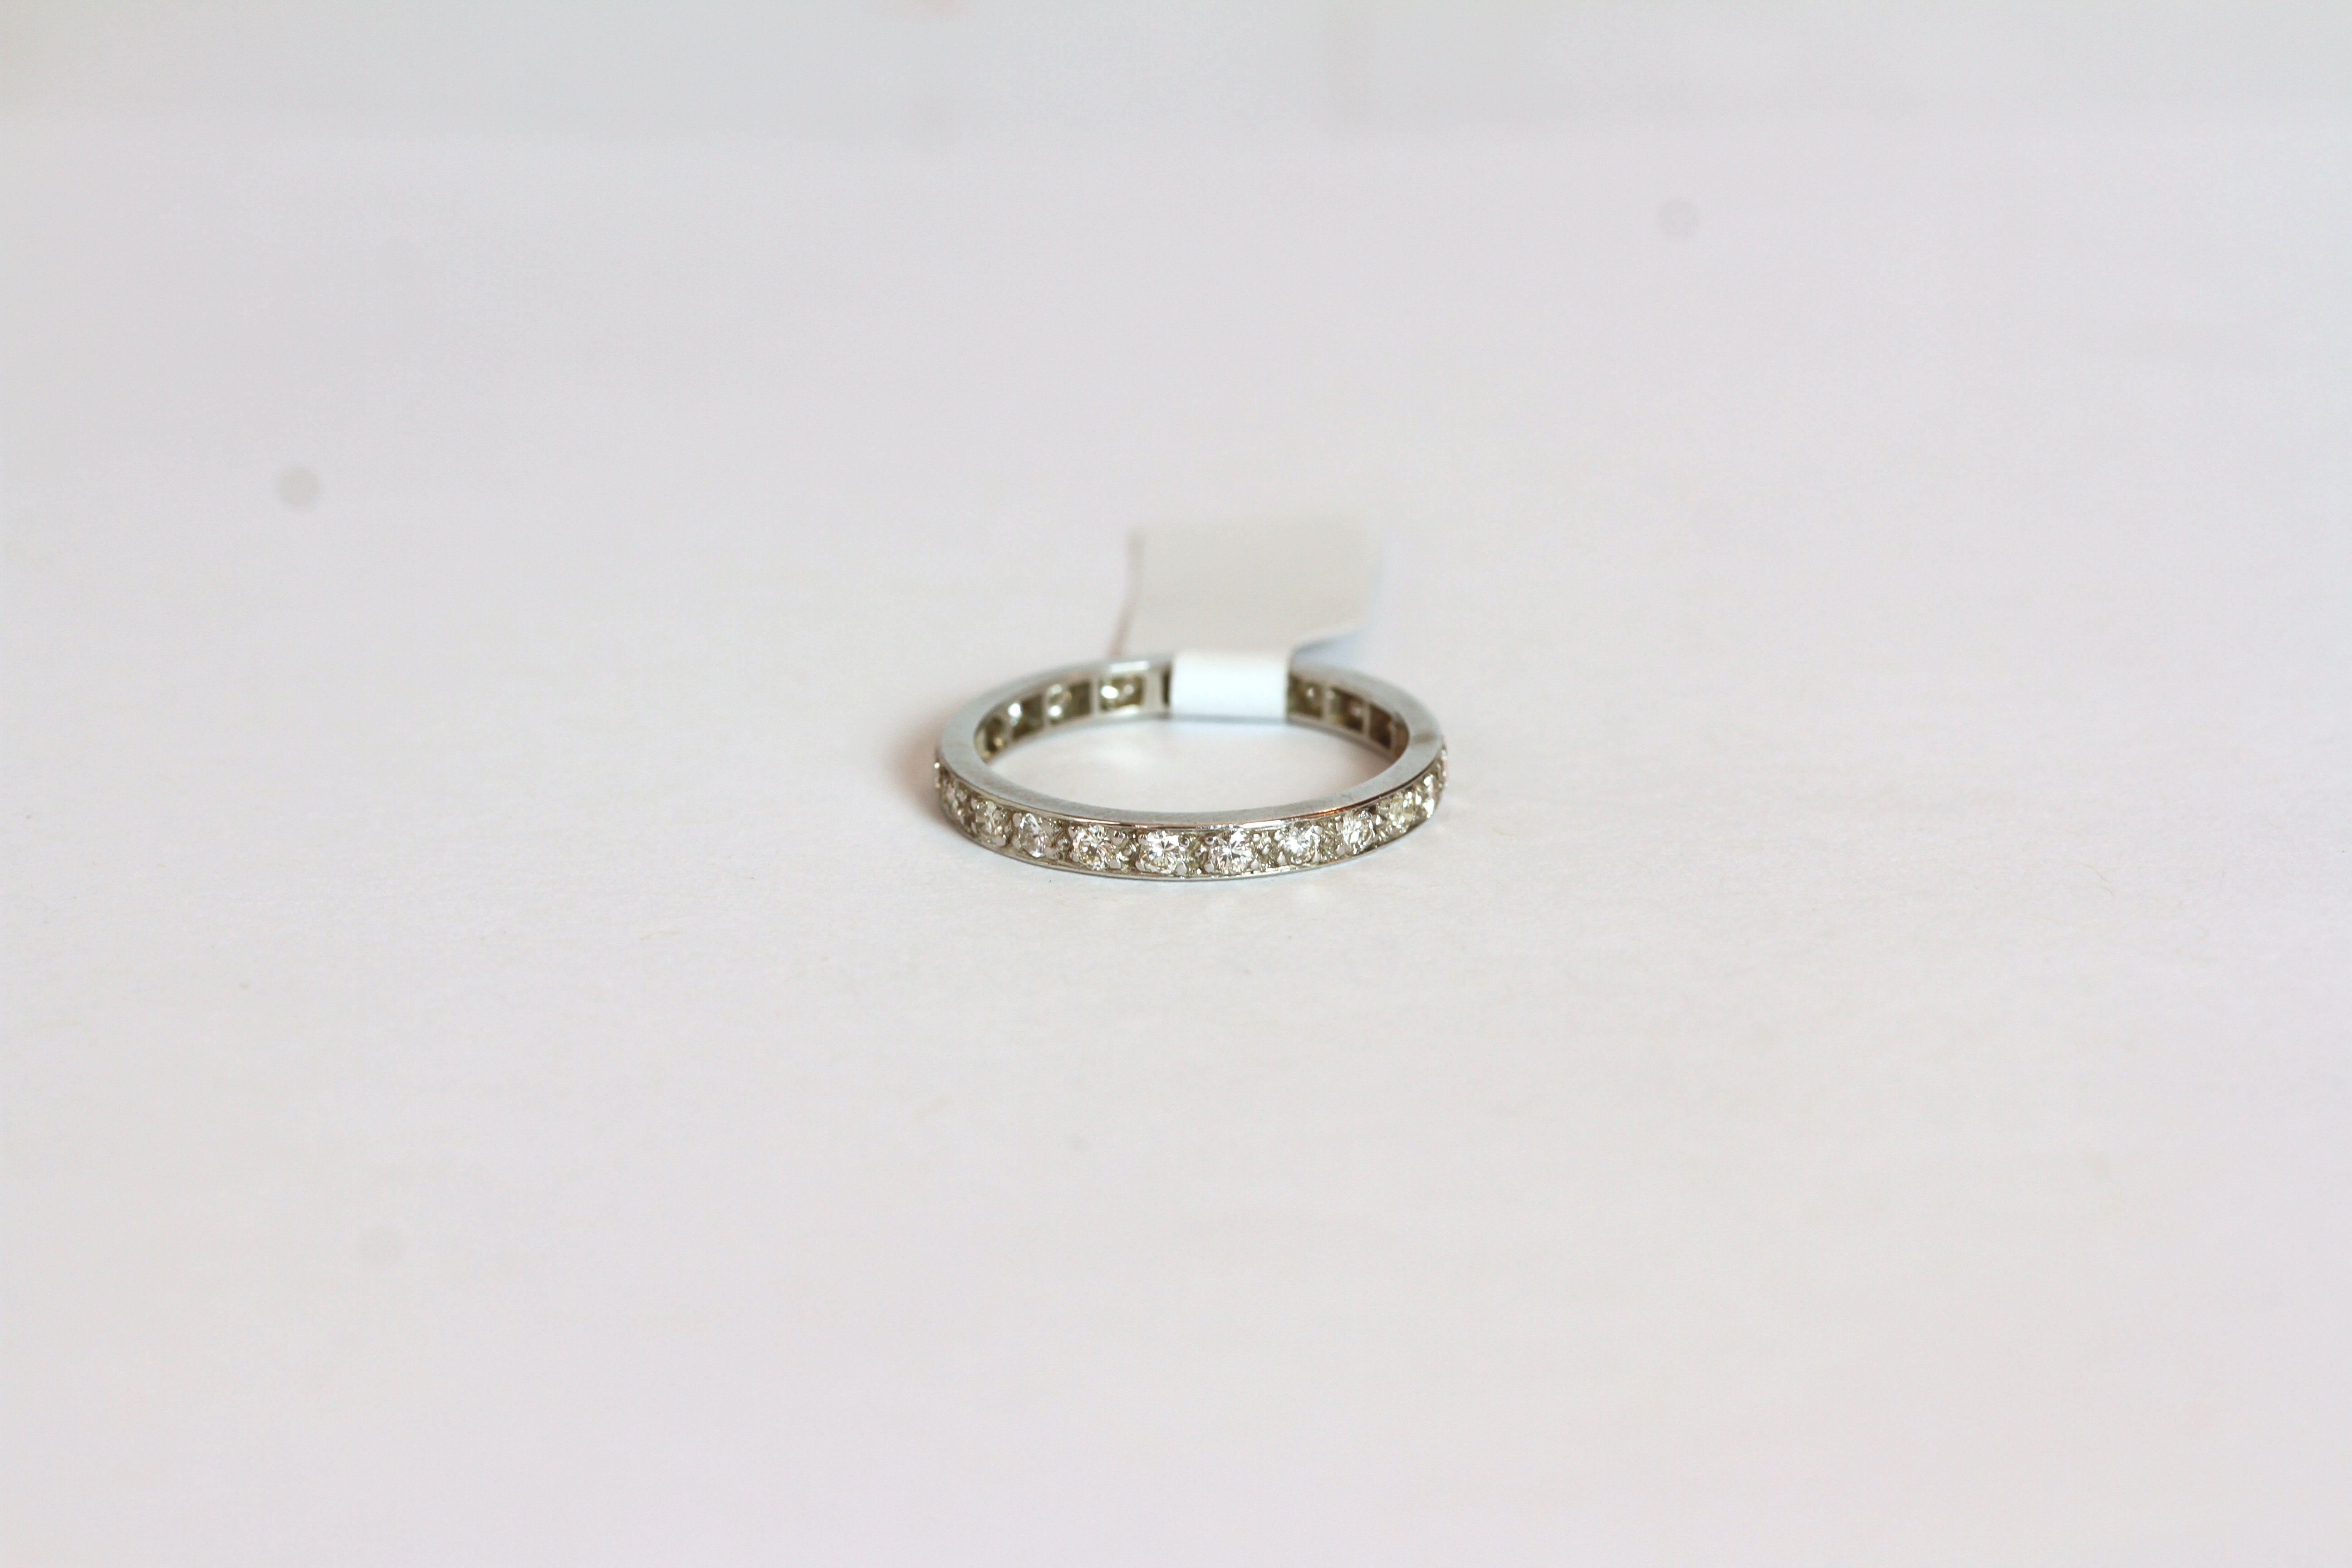 Diamond eternity ring, estimated total diamond weight 0.70ct, finger size Q.